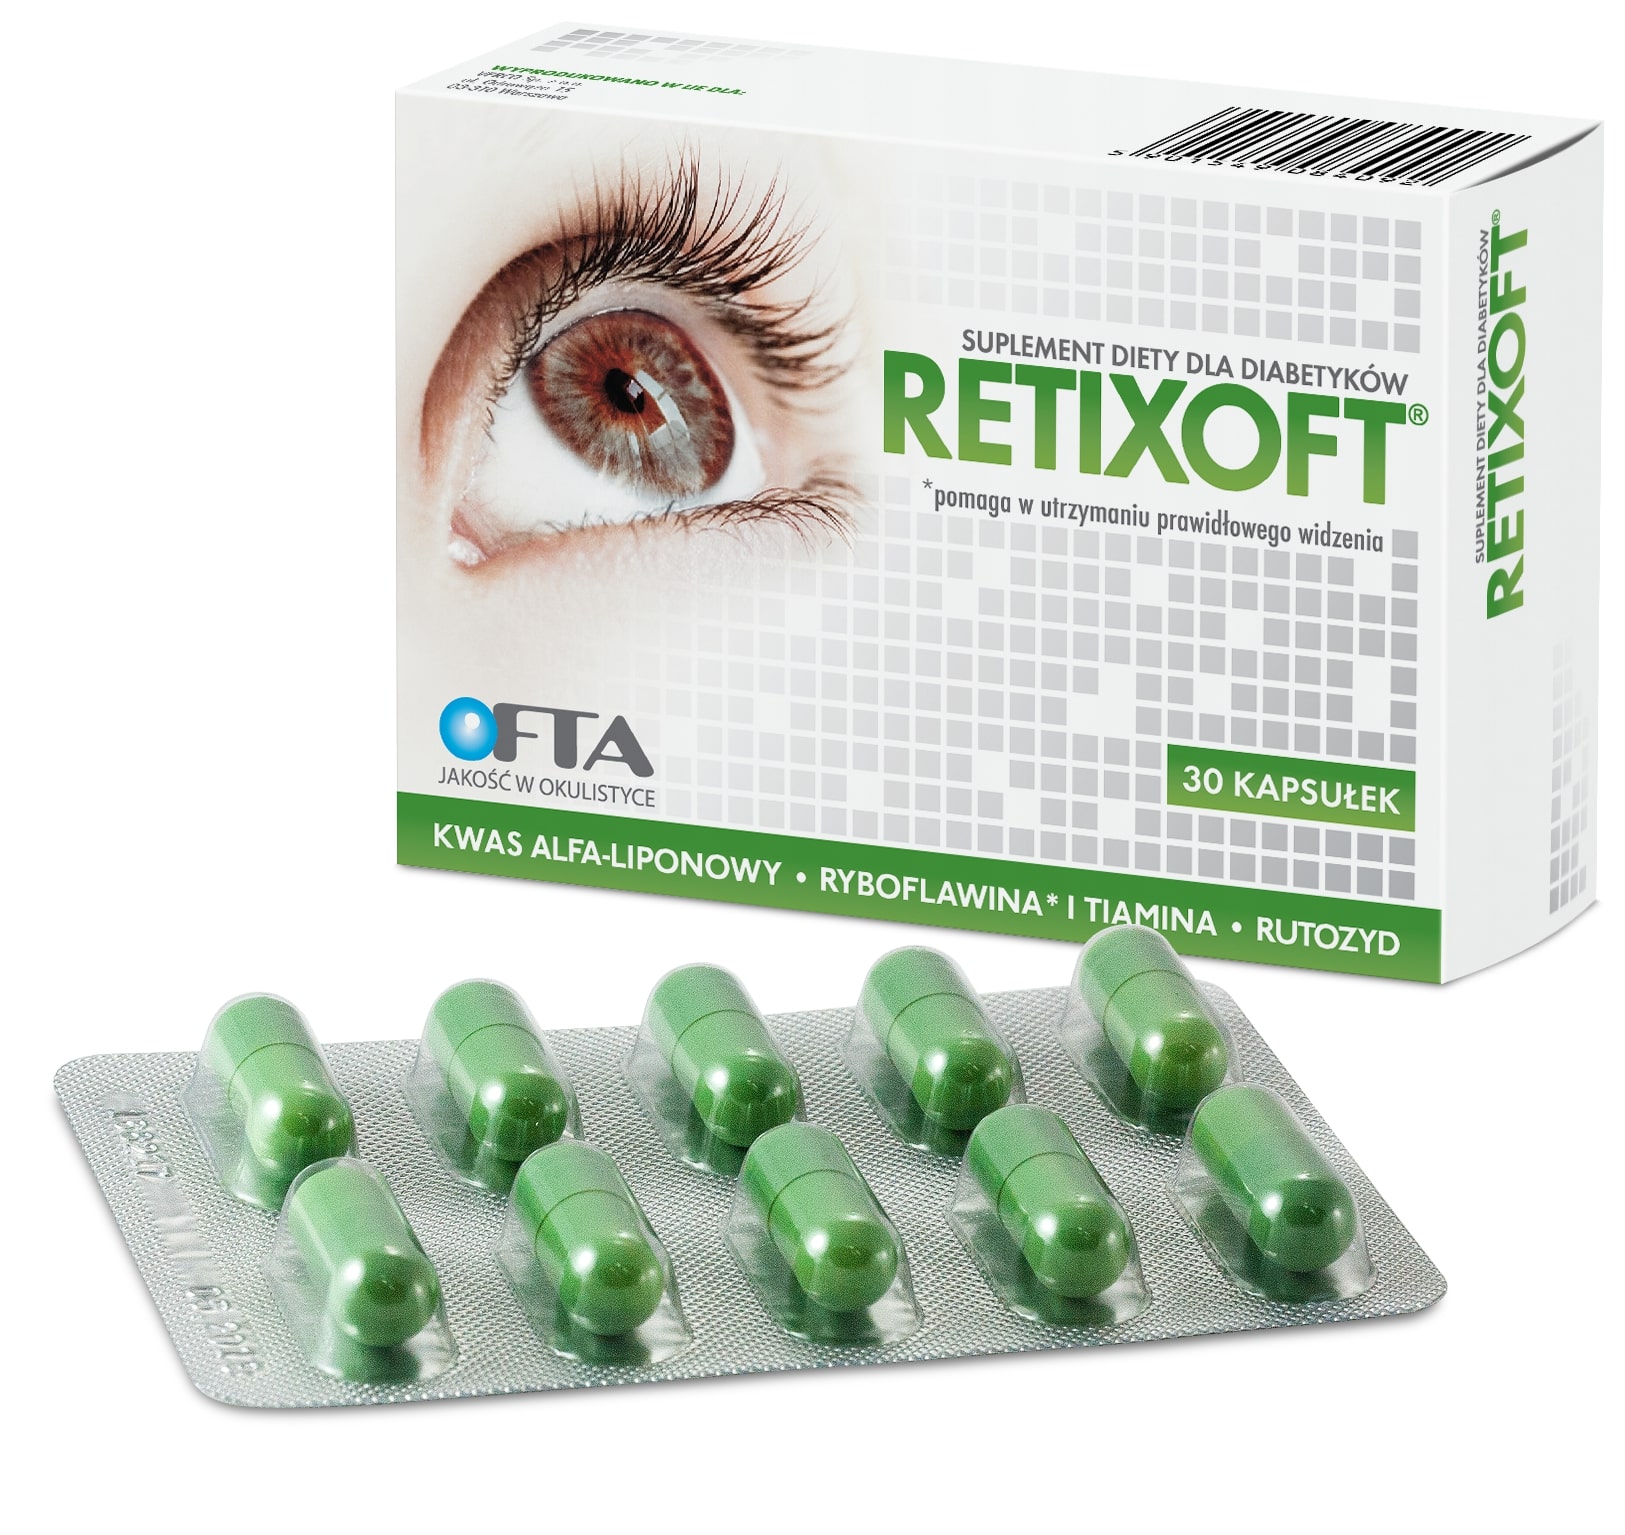 Retixoft capsules, for people with diabetes